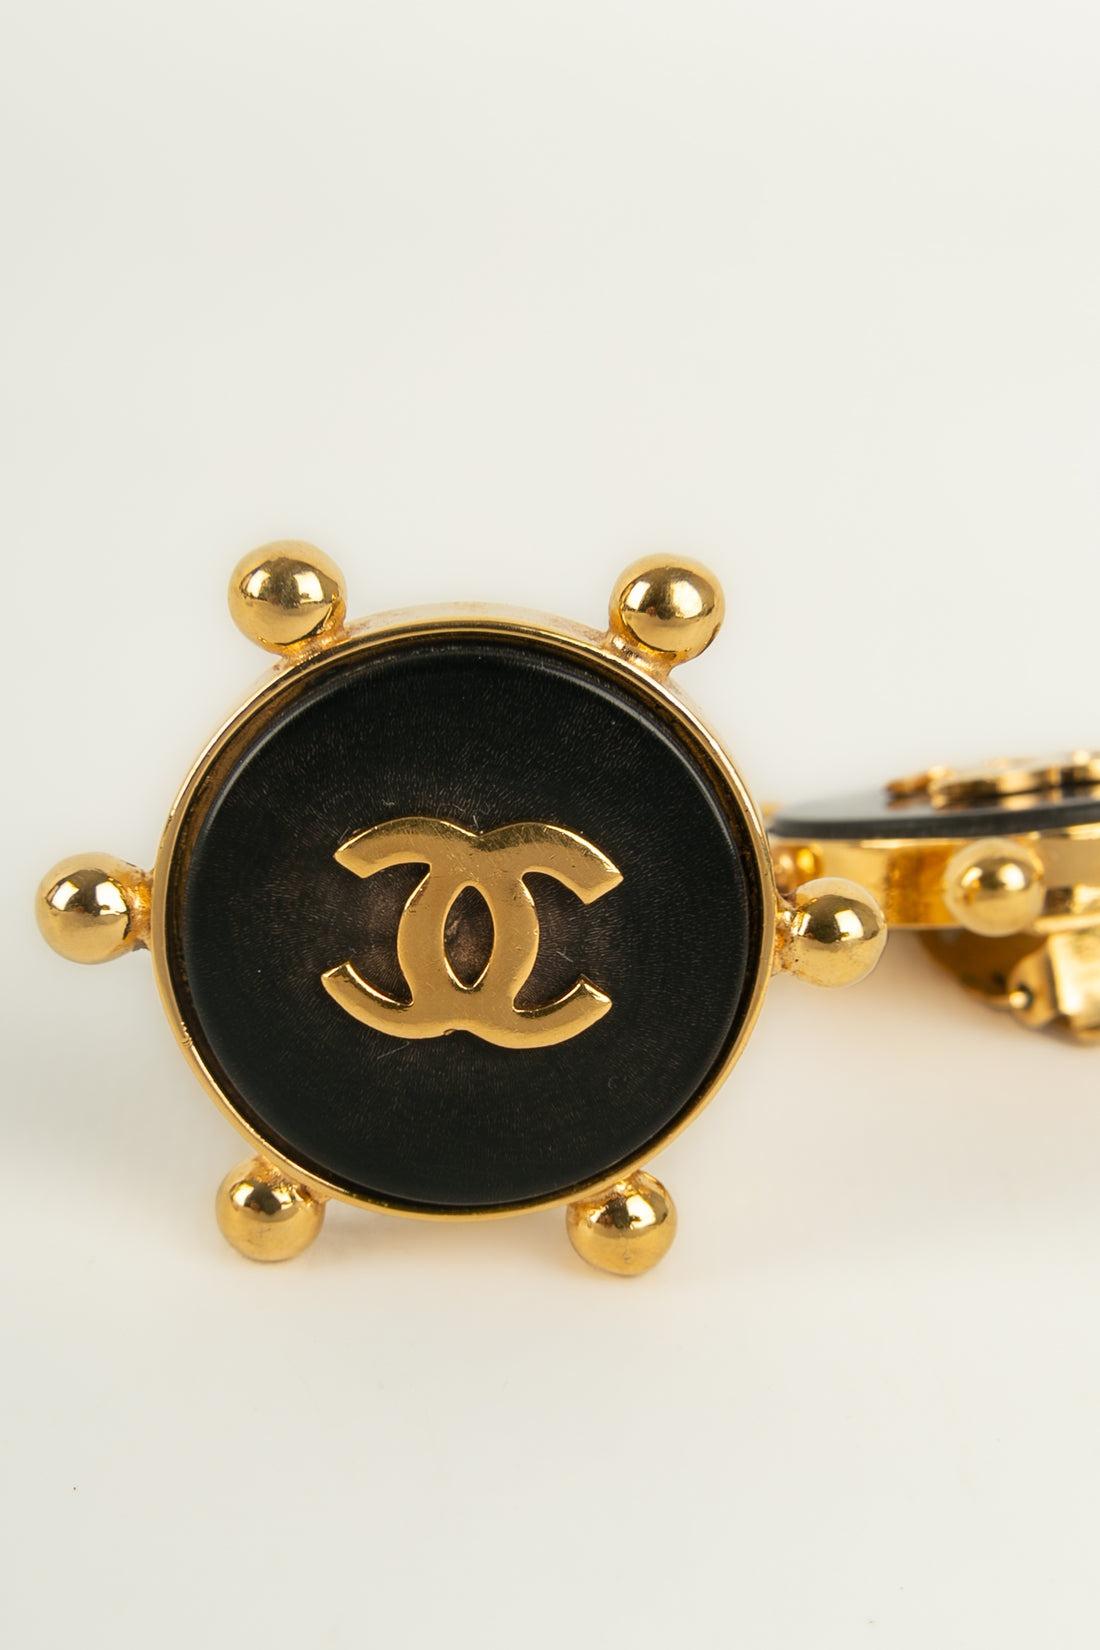 Chanel Earrings in Golden Metal and Black Bakelite 1